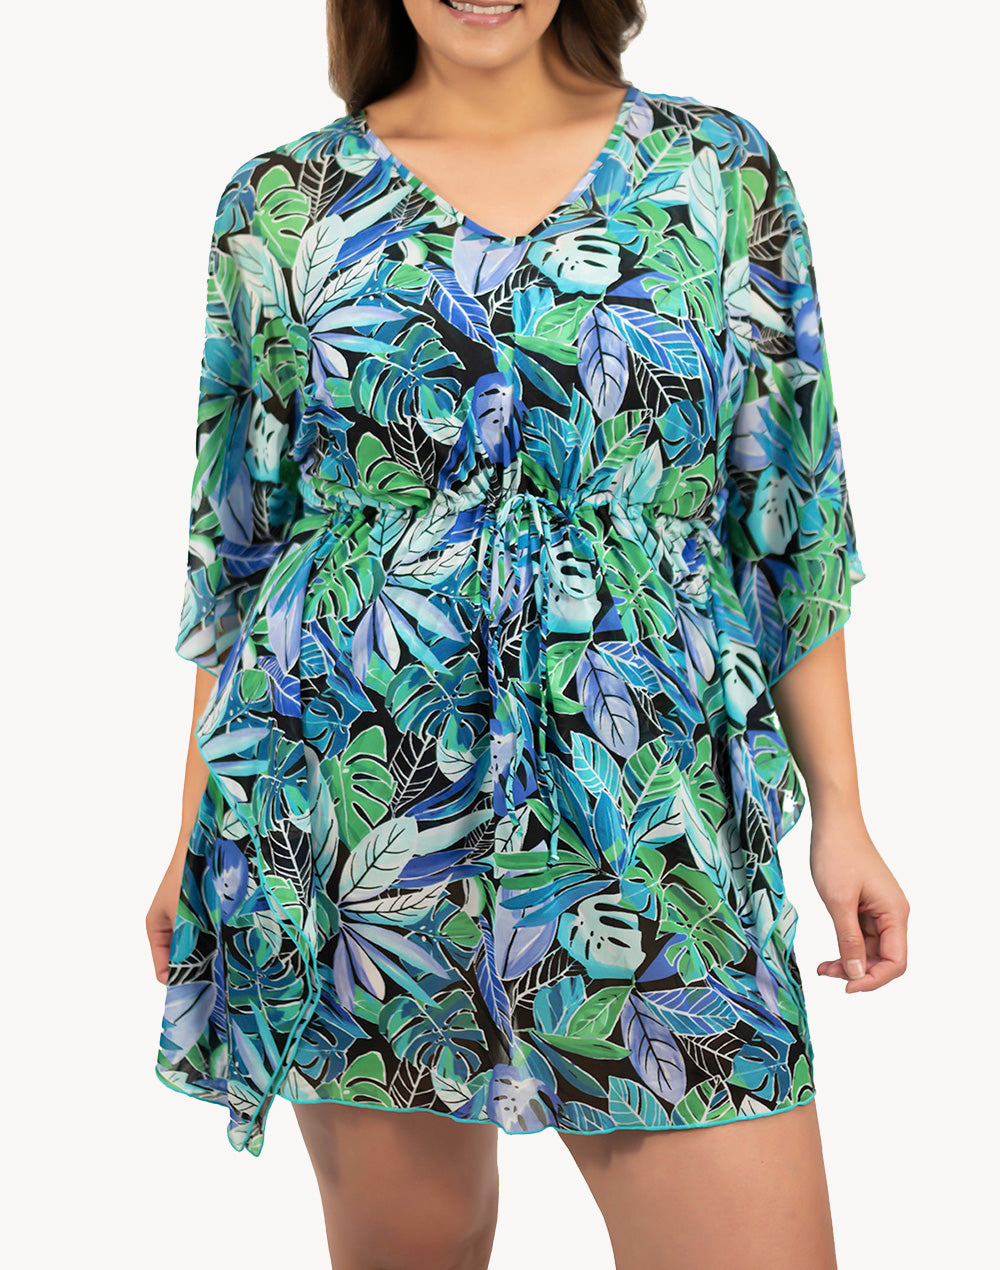 Palms Plus Size Mesh V Neck Drawstring Cover Up#color_palms-green-blue